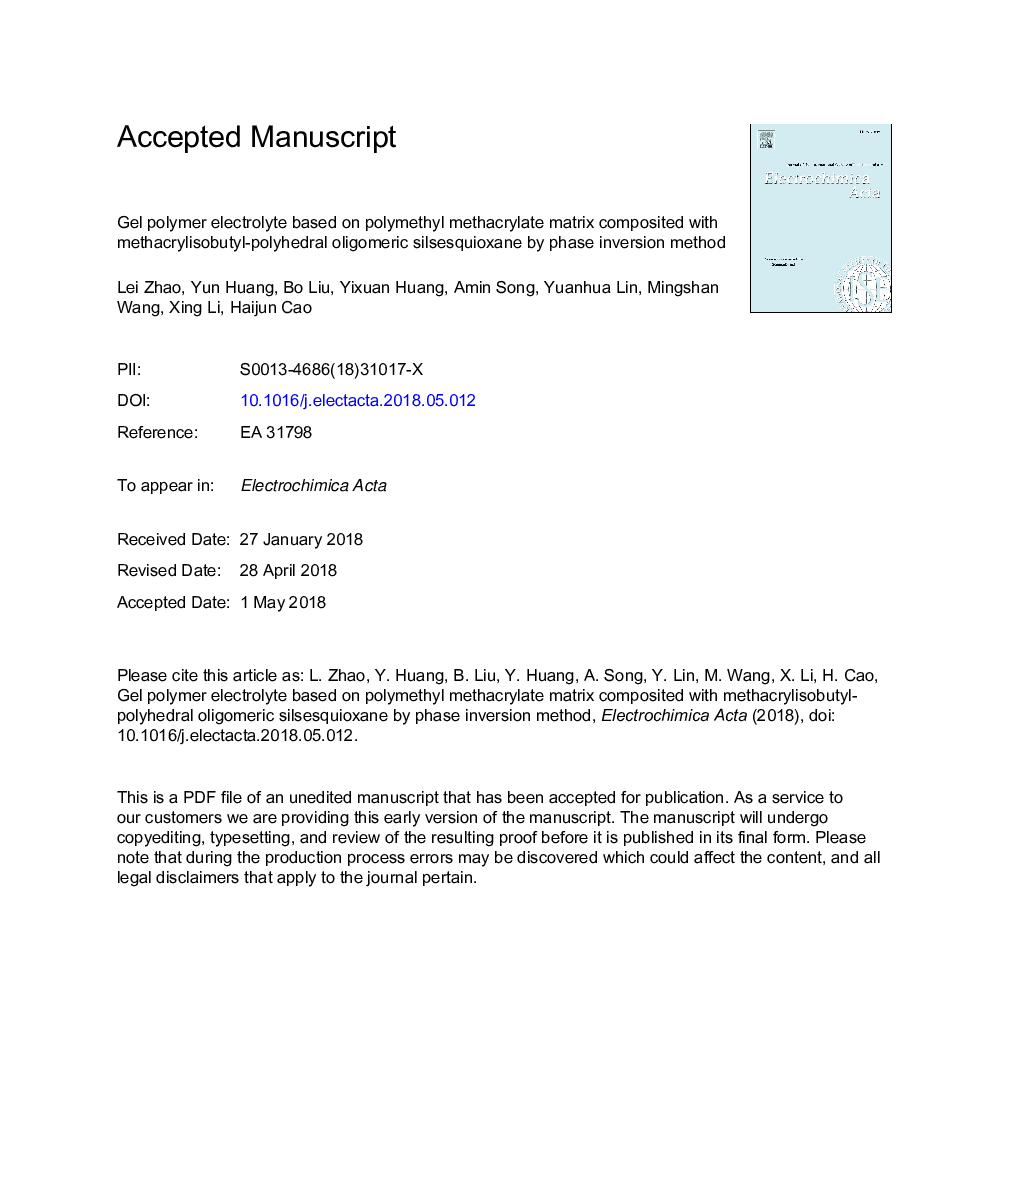 Gel polymer electrolyte based on polymethyl methacrylate matrix composited with methacrylisobutyl-polyhedral oligomeric silsesquioxane by phase inversion method